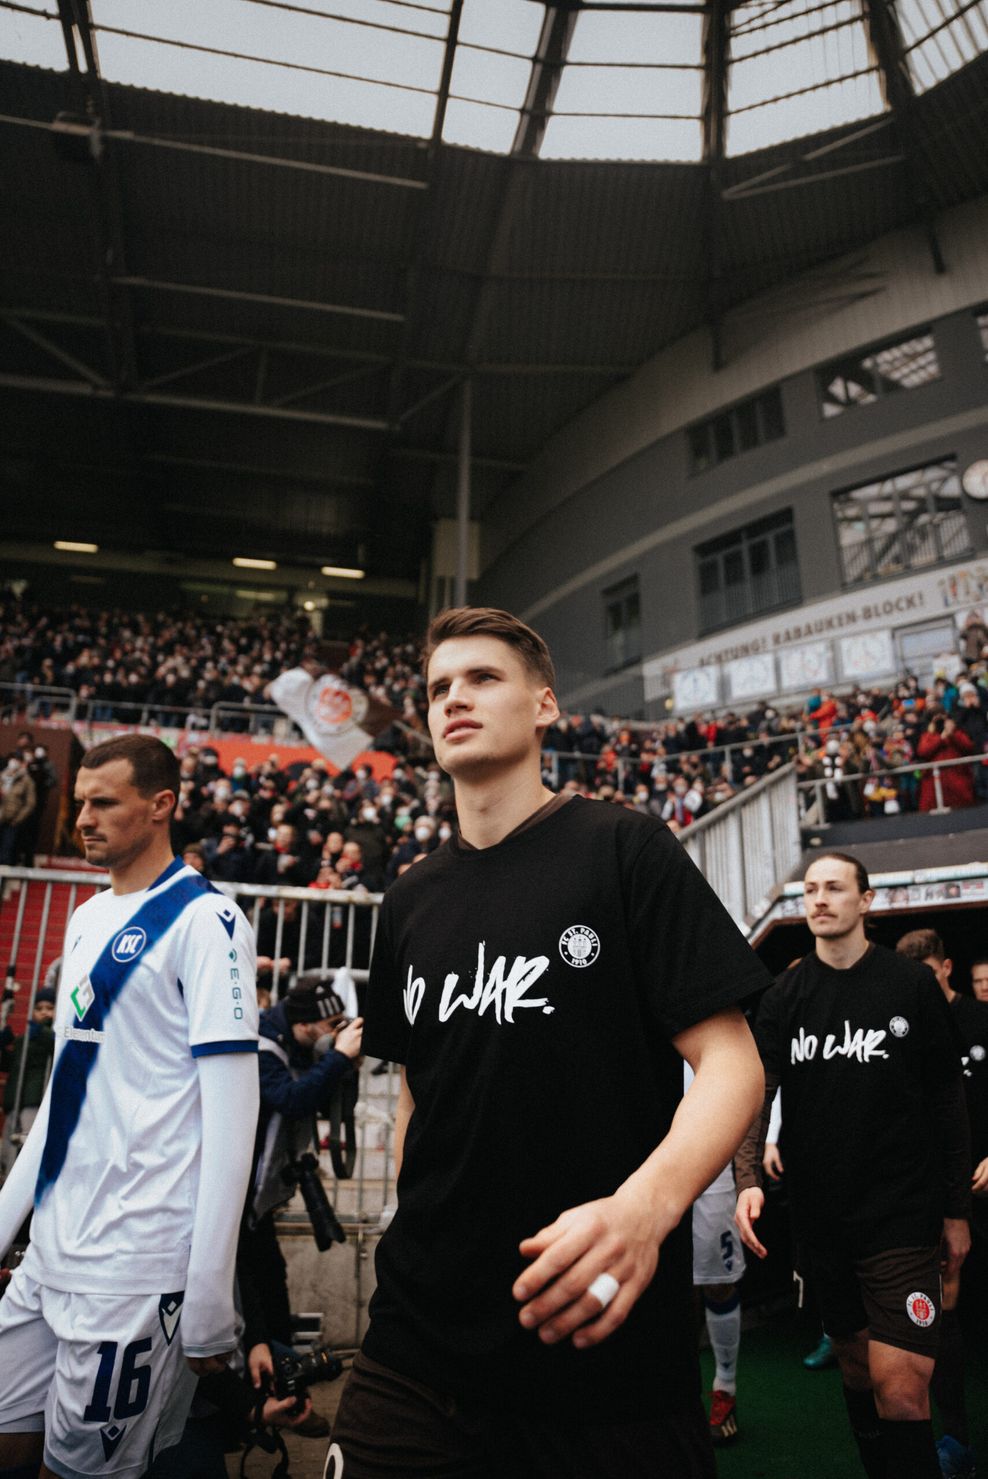 Luca Zander vom FC St. Pauli in dem Soli-Shirt